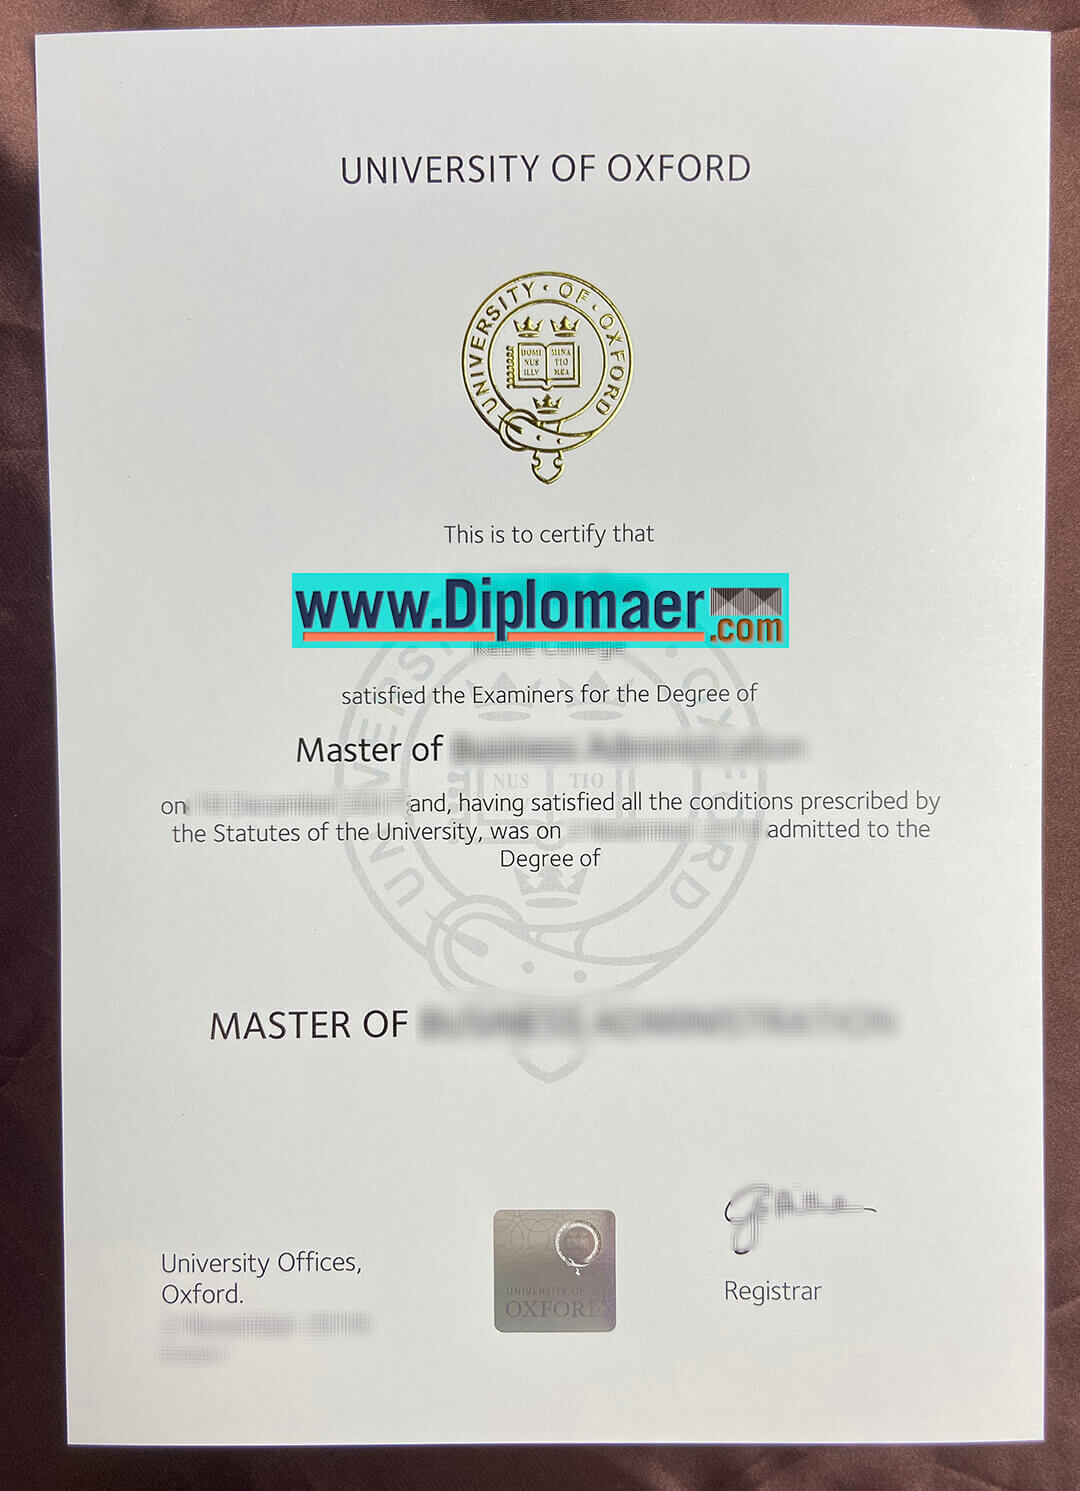 University of Oxford Fake Diploma 2 - Where to Get a High Quality University of Oxford Fake Certificate?